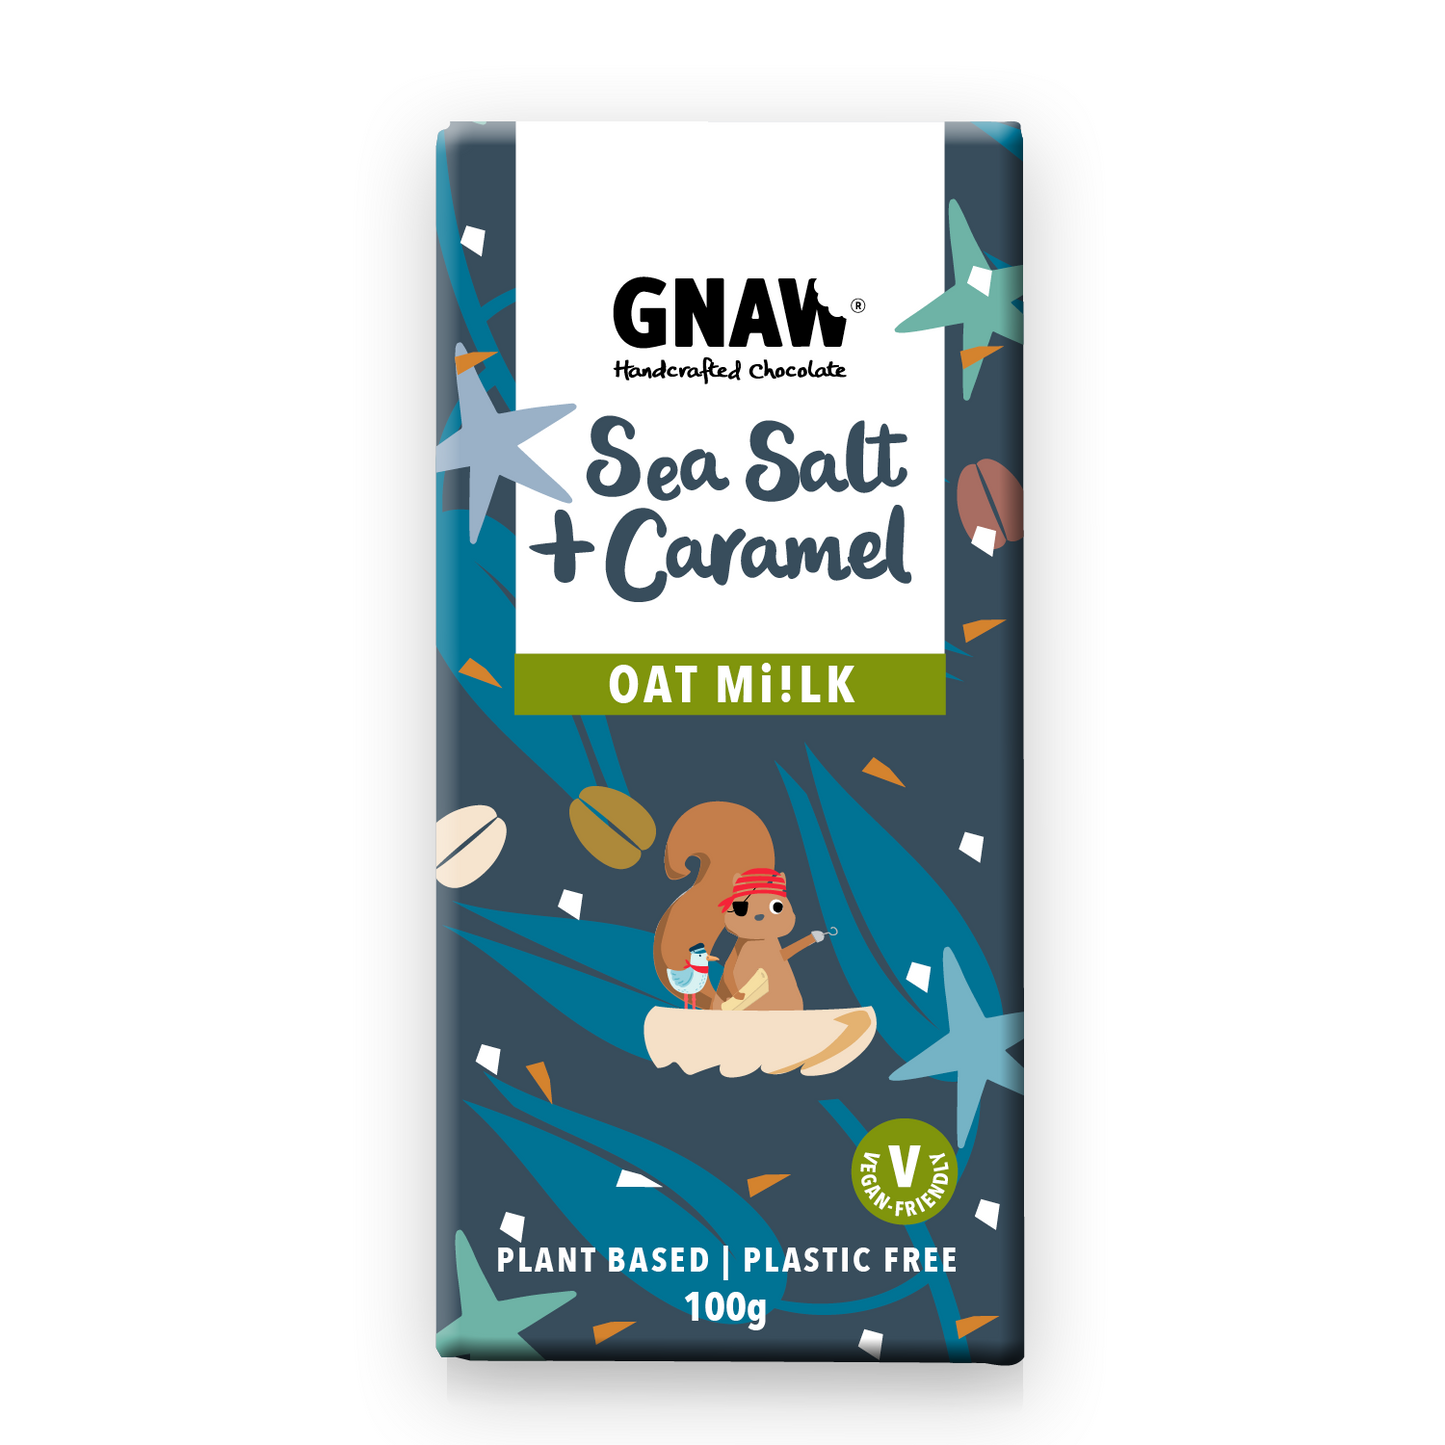 Gnaw Sea Salt & Caramel Oat M!lk Chocolate Bar (100g)